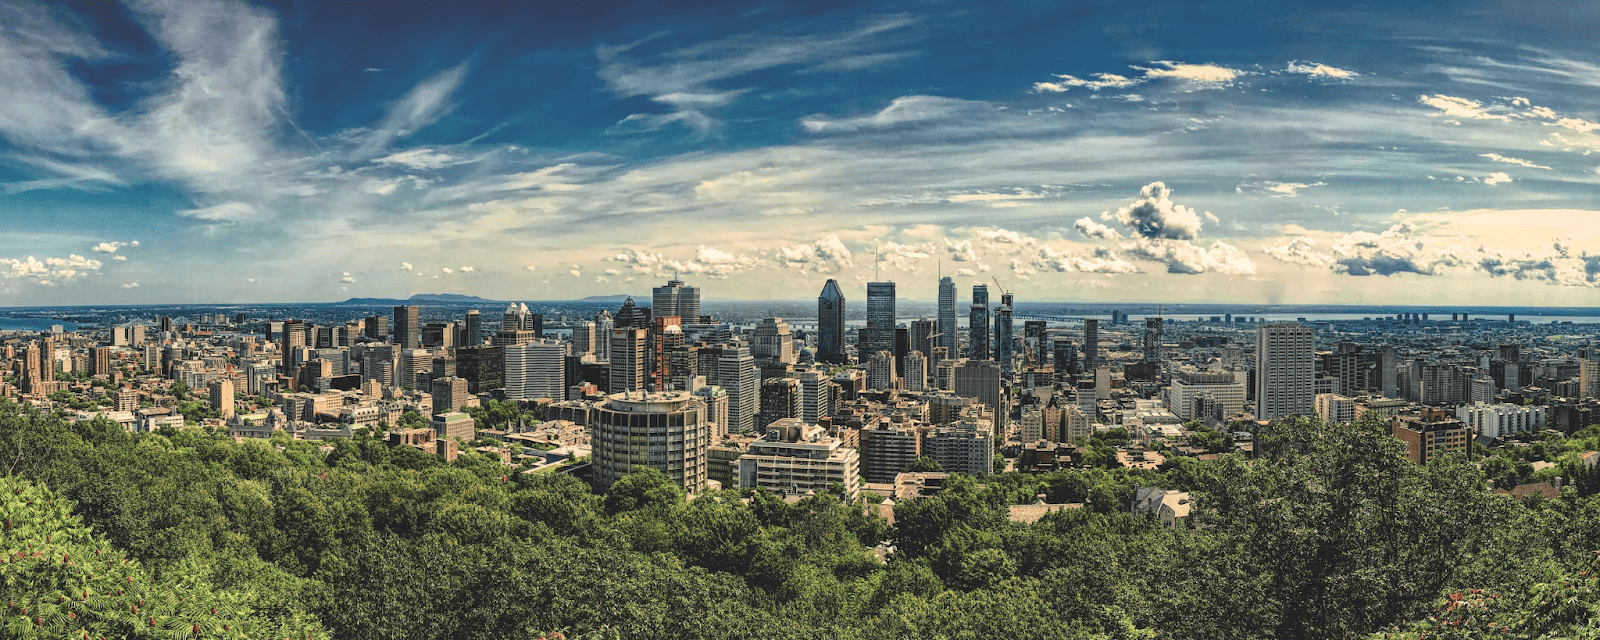 Montreal,Qc Real Estate Market Forecast 2023